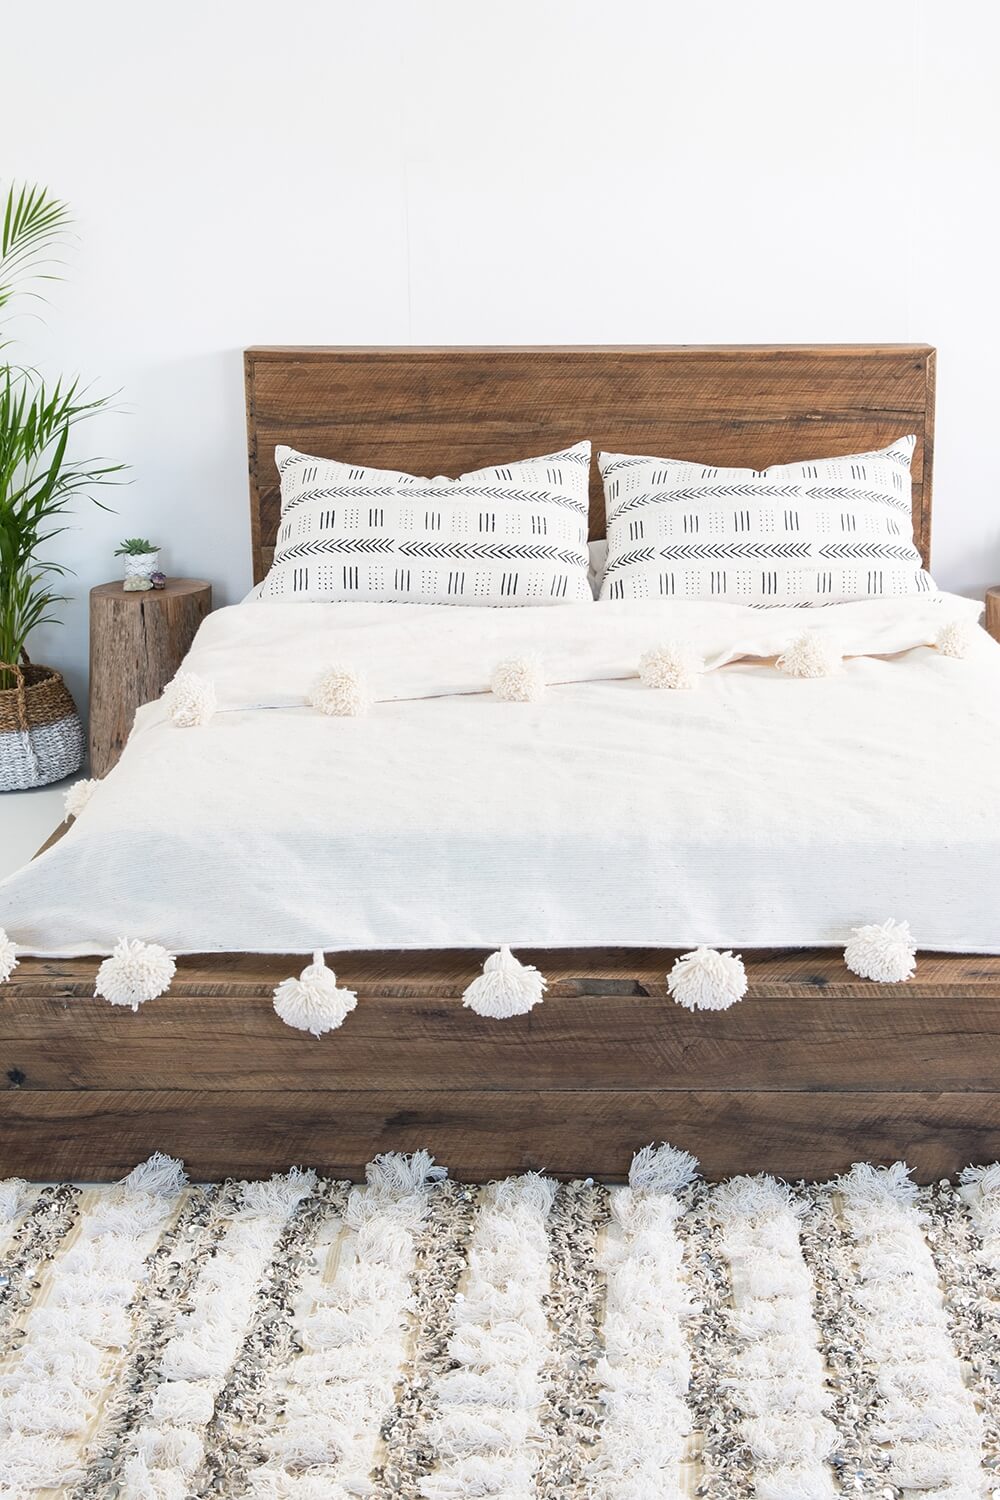 25 rustic bedroom design decor ideas homebnc